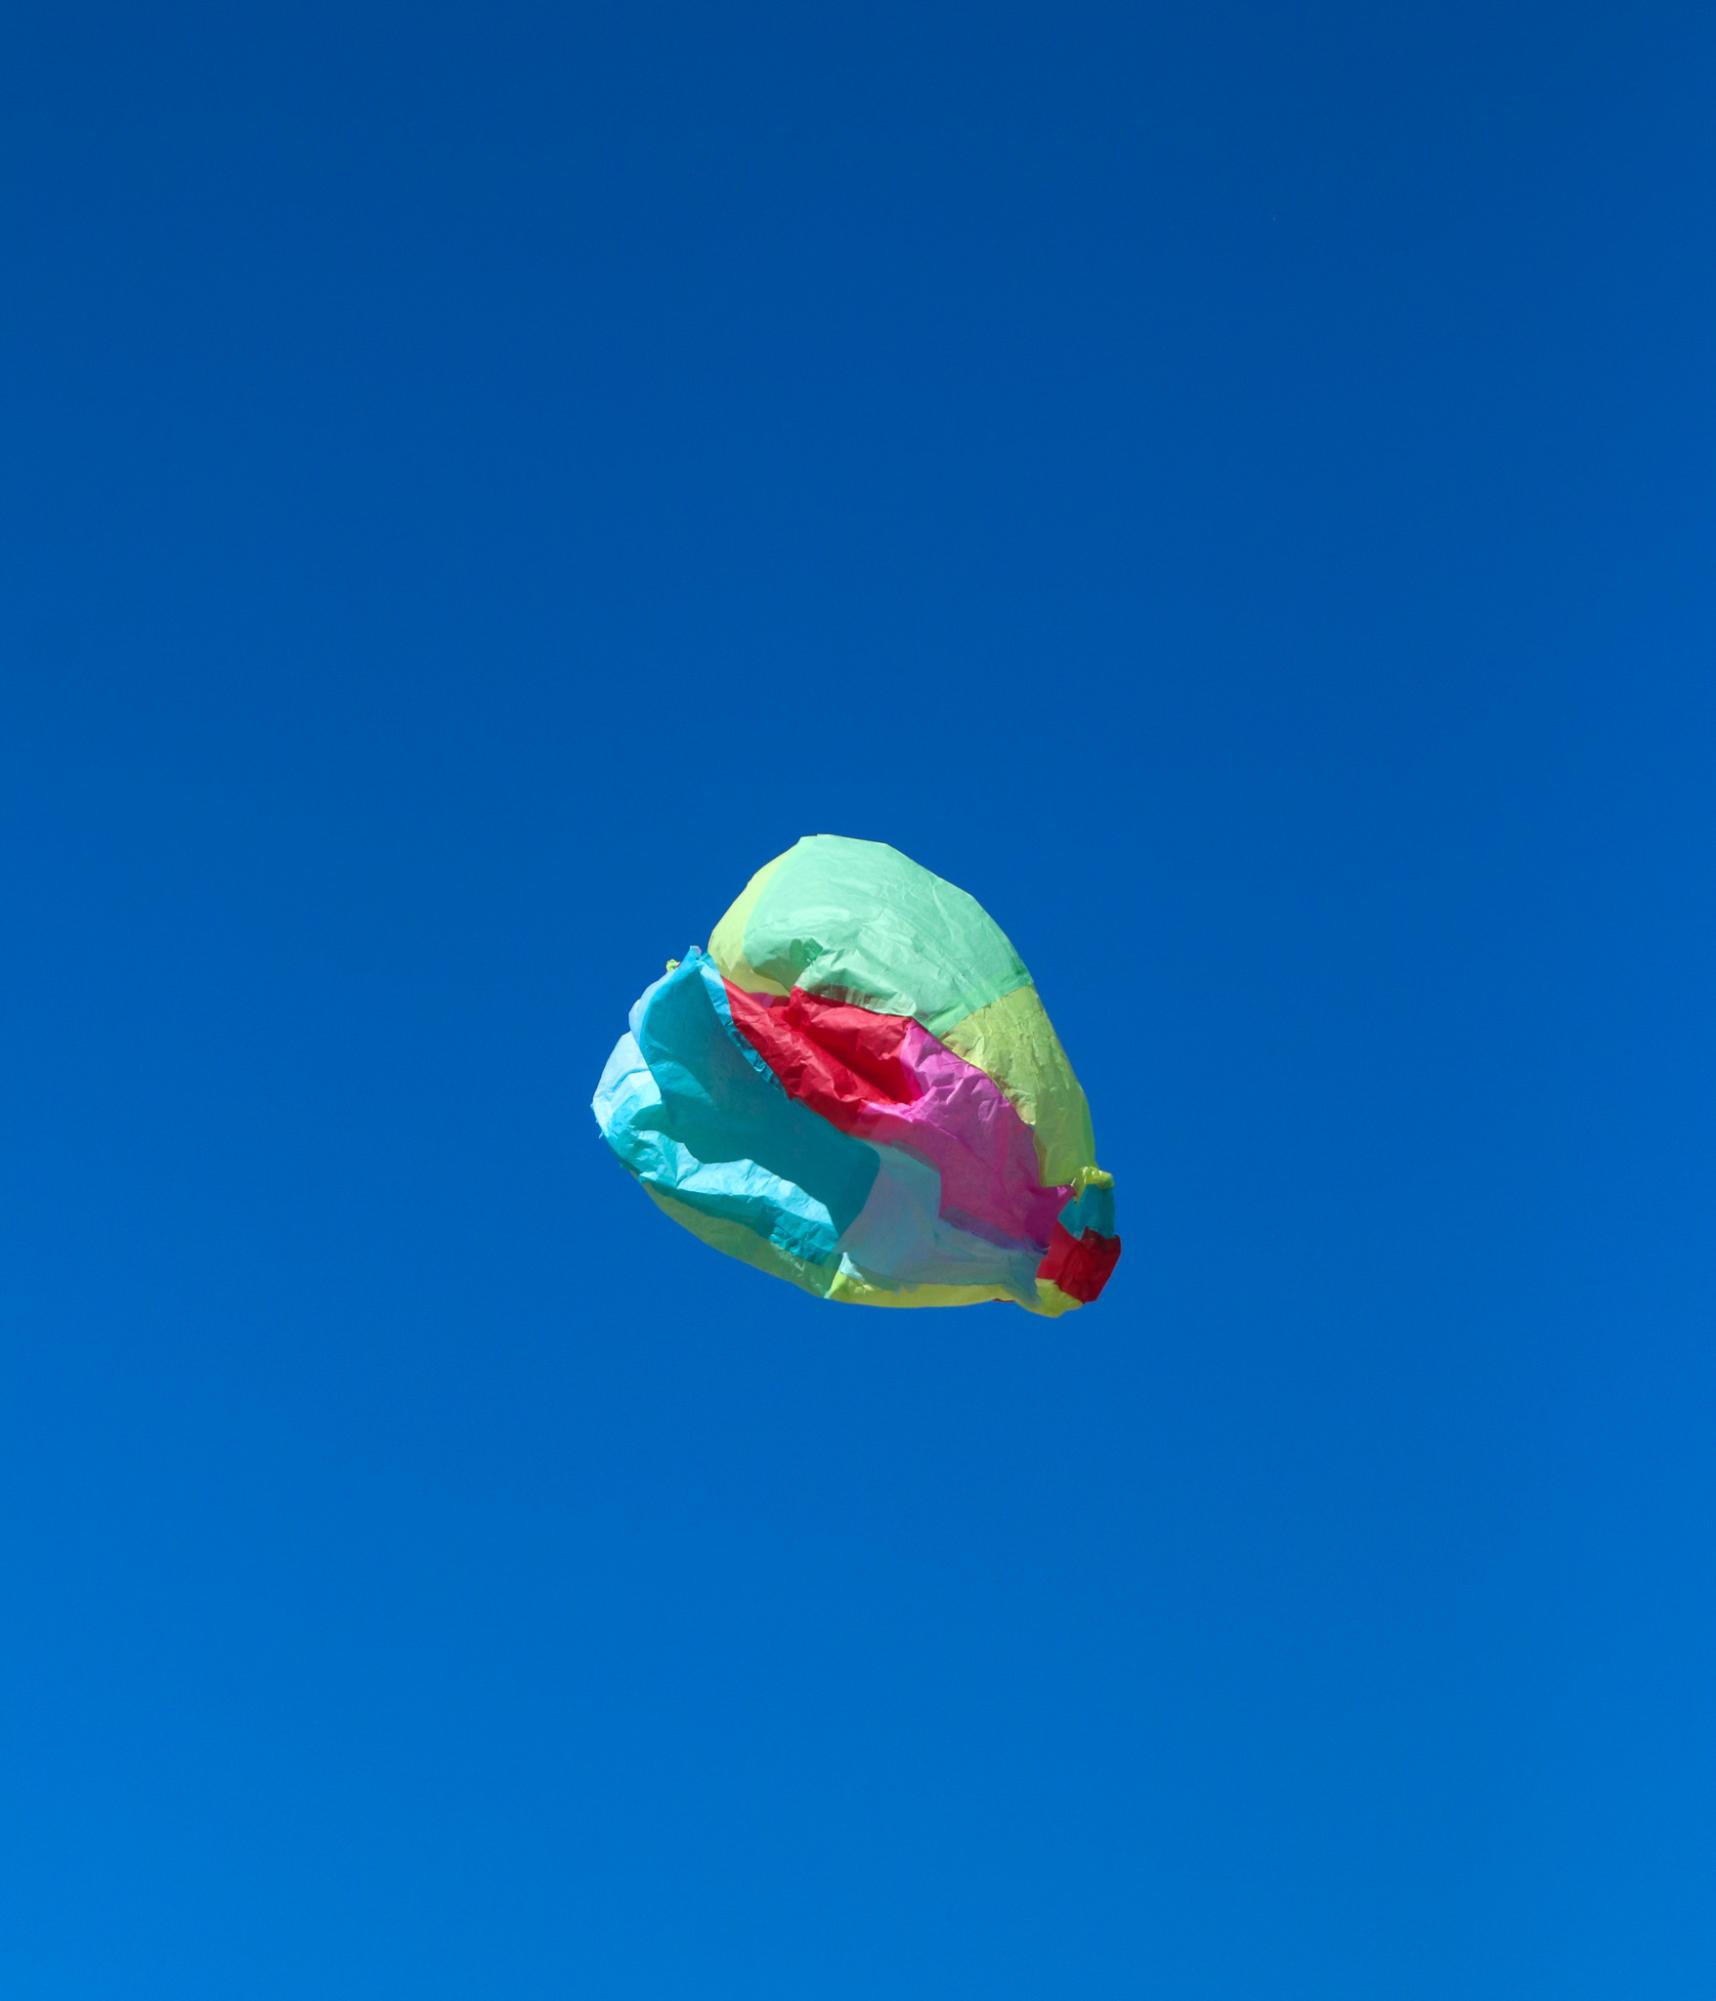 ROTC+Hot+Air+Balloon+%28Photos+by+Delainey+Stephenson%29